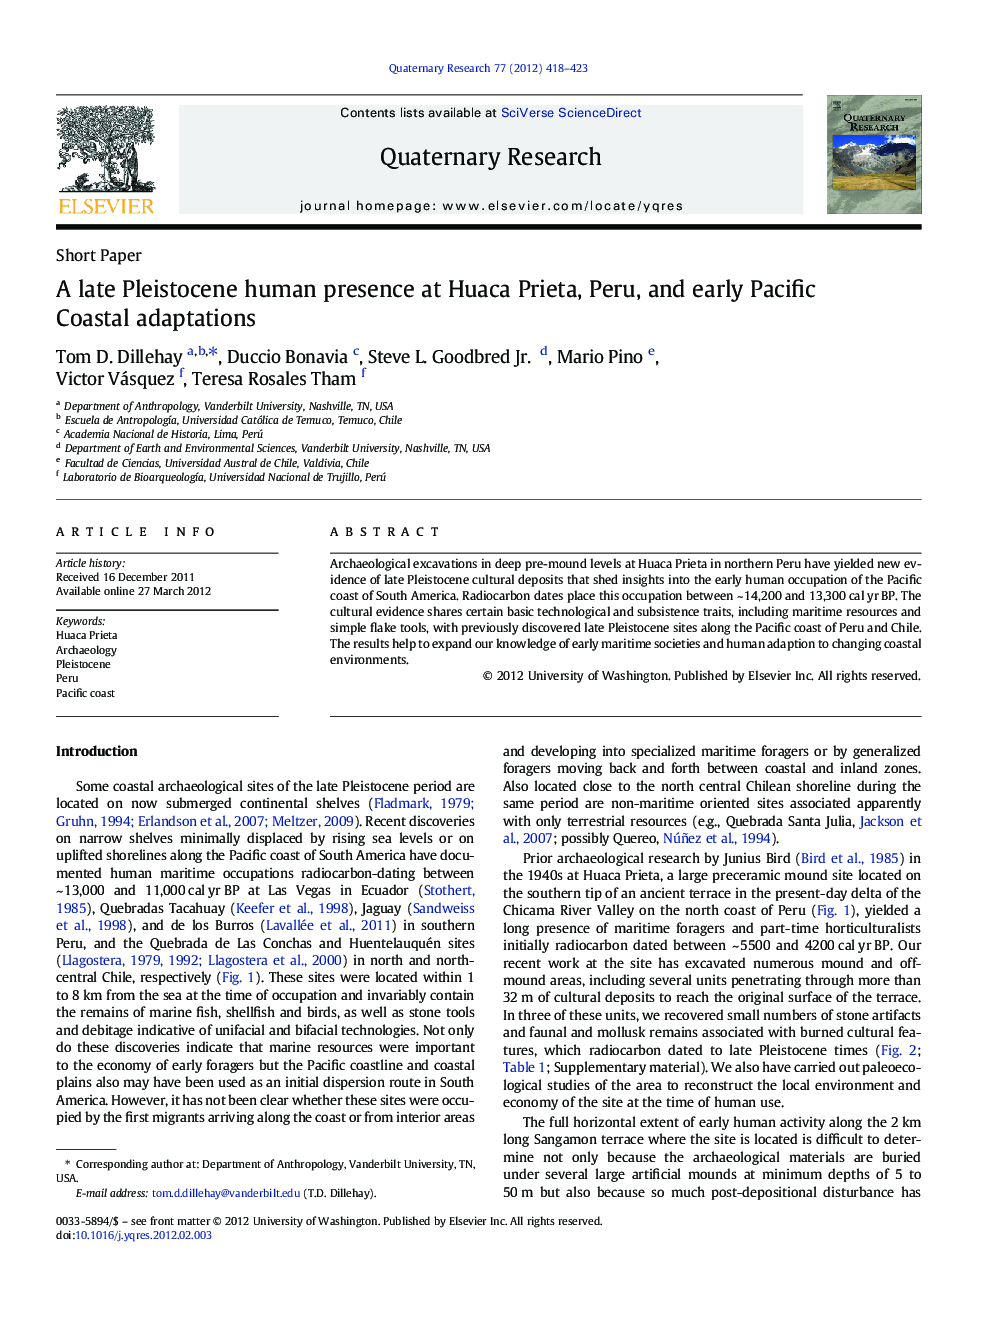 A late Pleistocene human presence at Huaca Prieta, Peru, and early Pacific Coastal adaptations